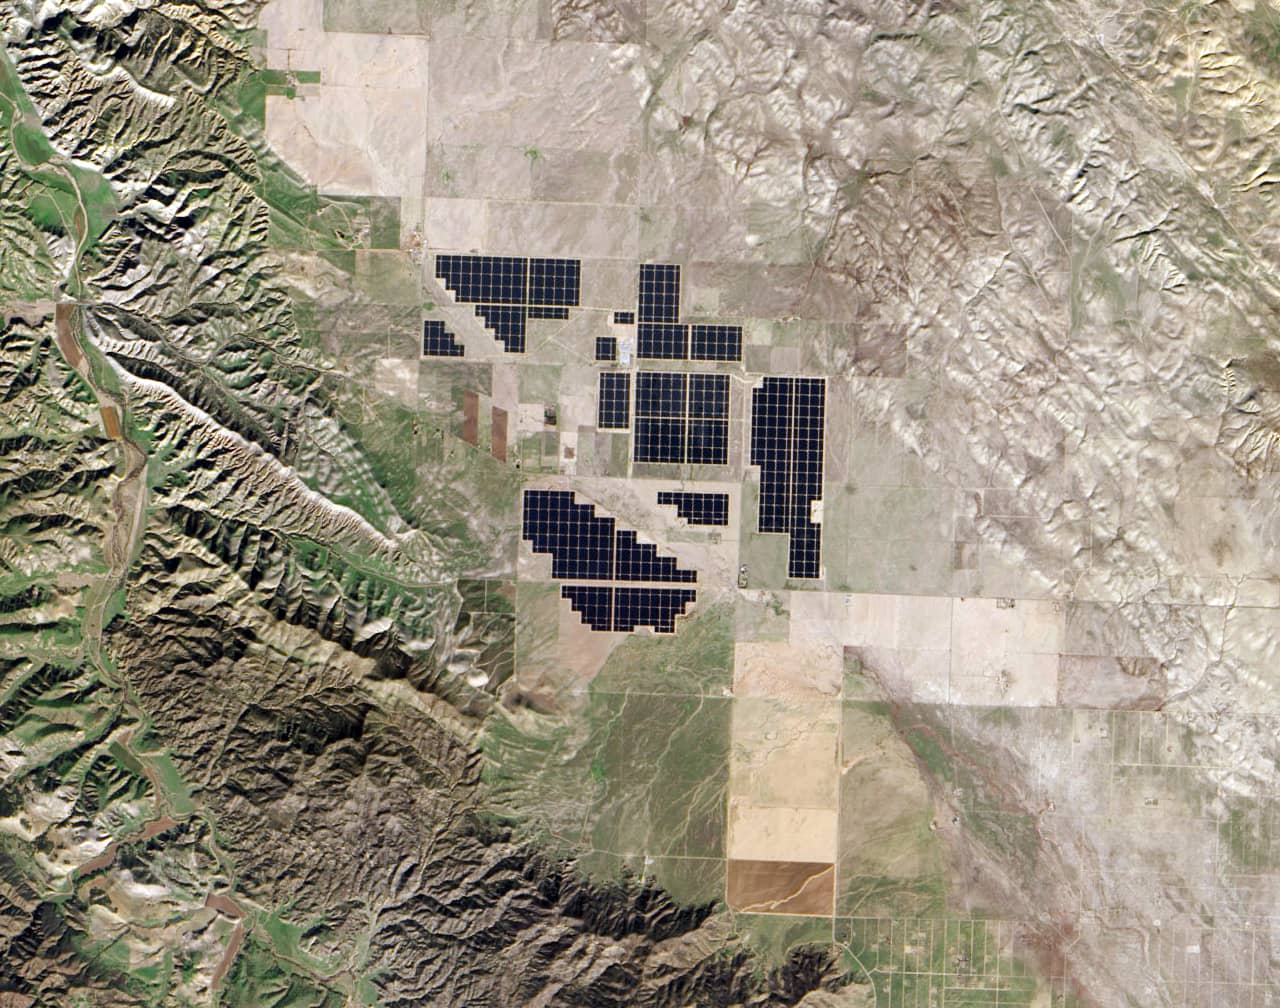 The satellite image of Topaz Solar Farm captured on January 2, 2015